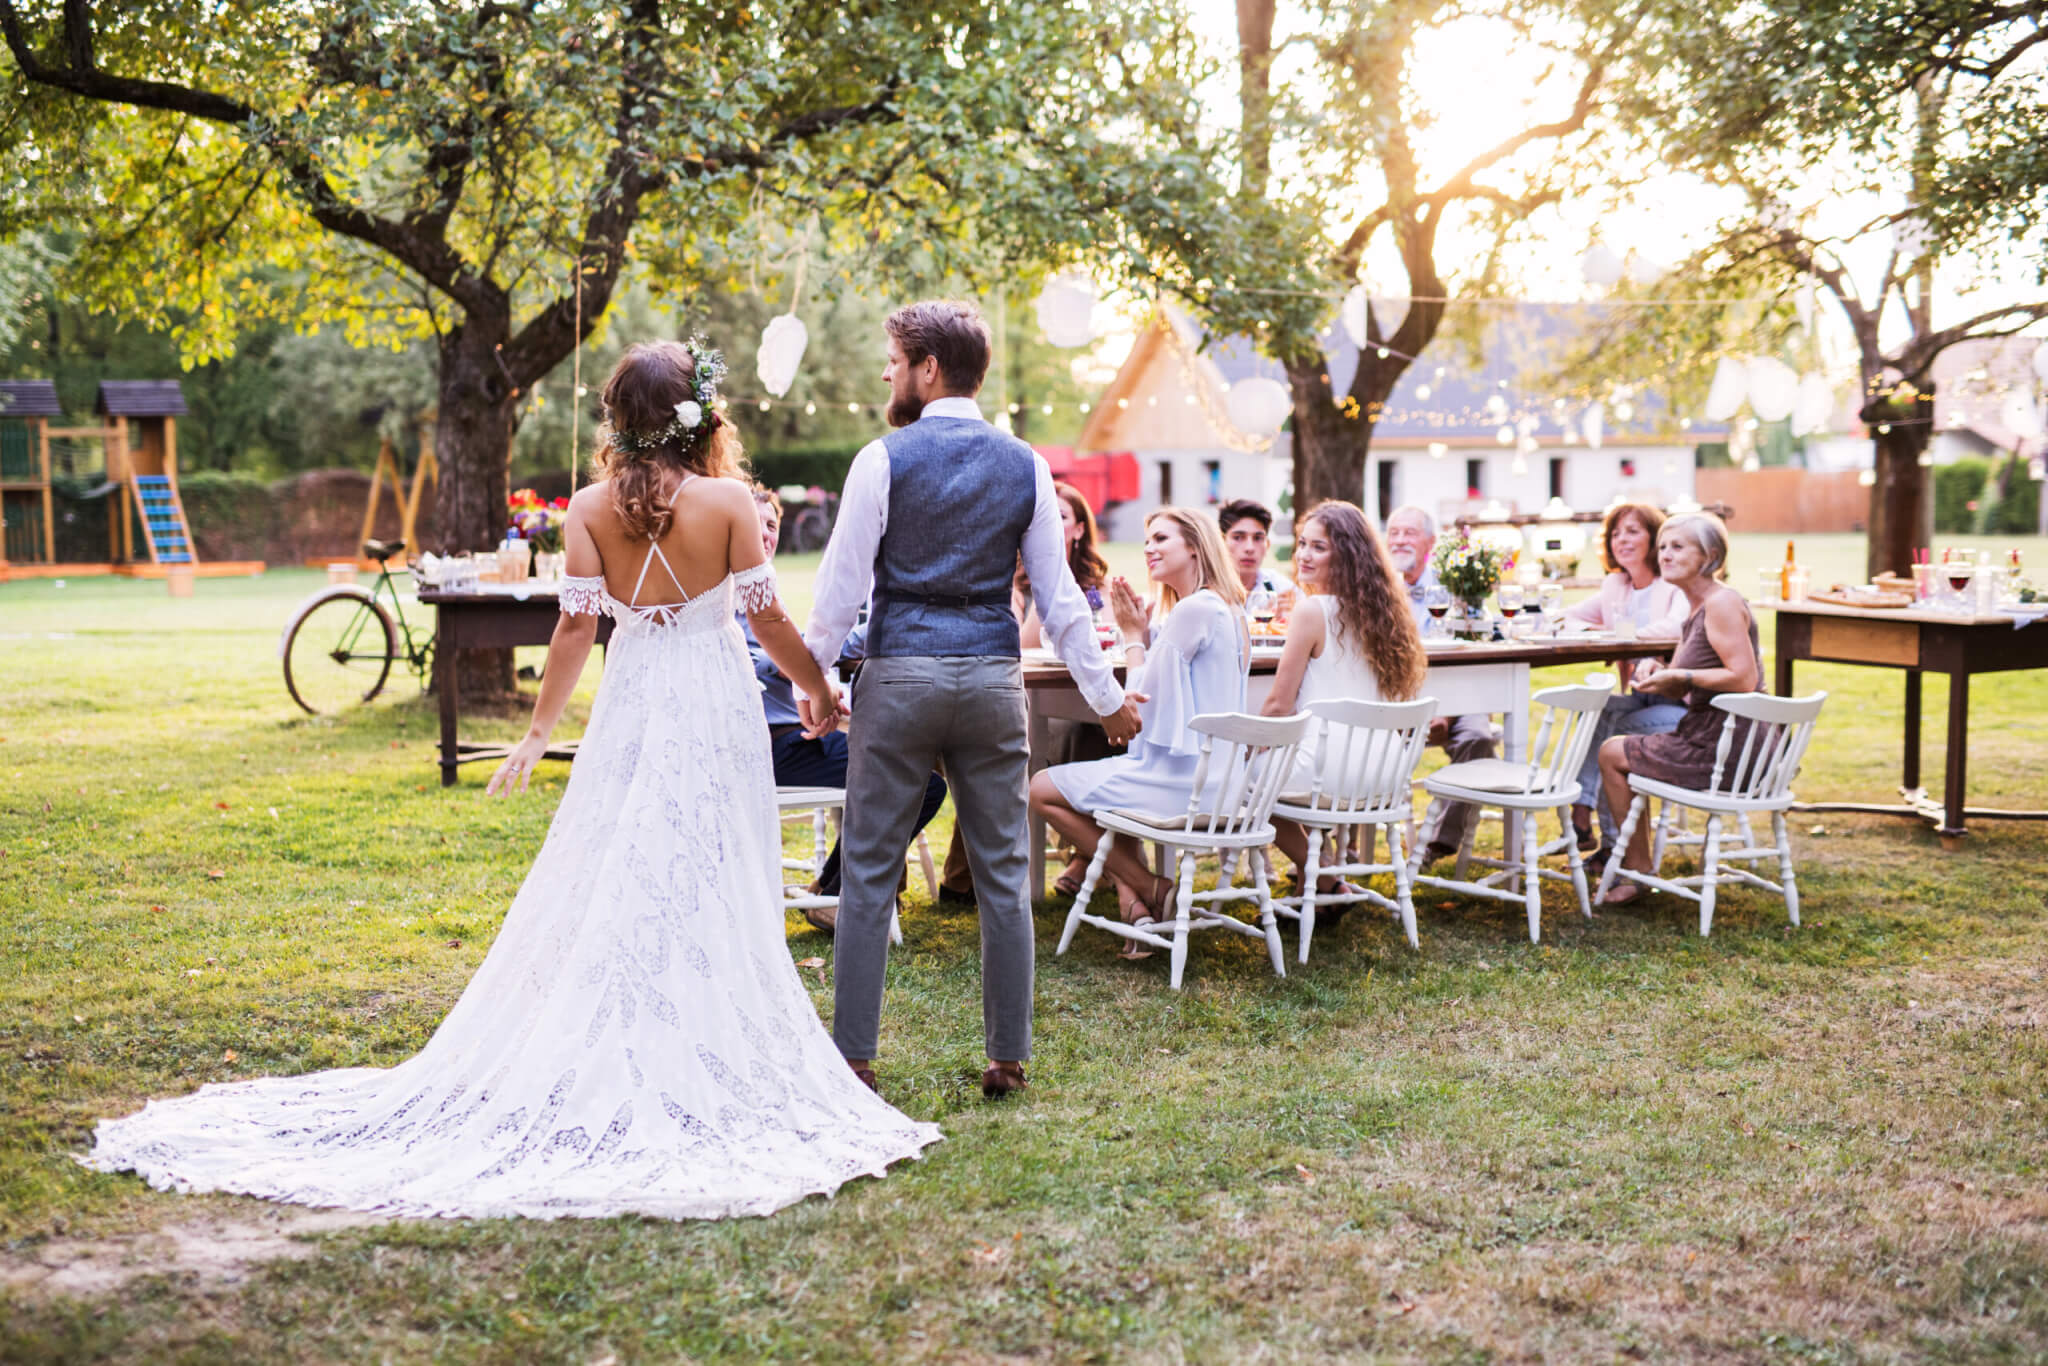 8 Tips to Help Throw a Backyard Wedding